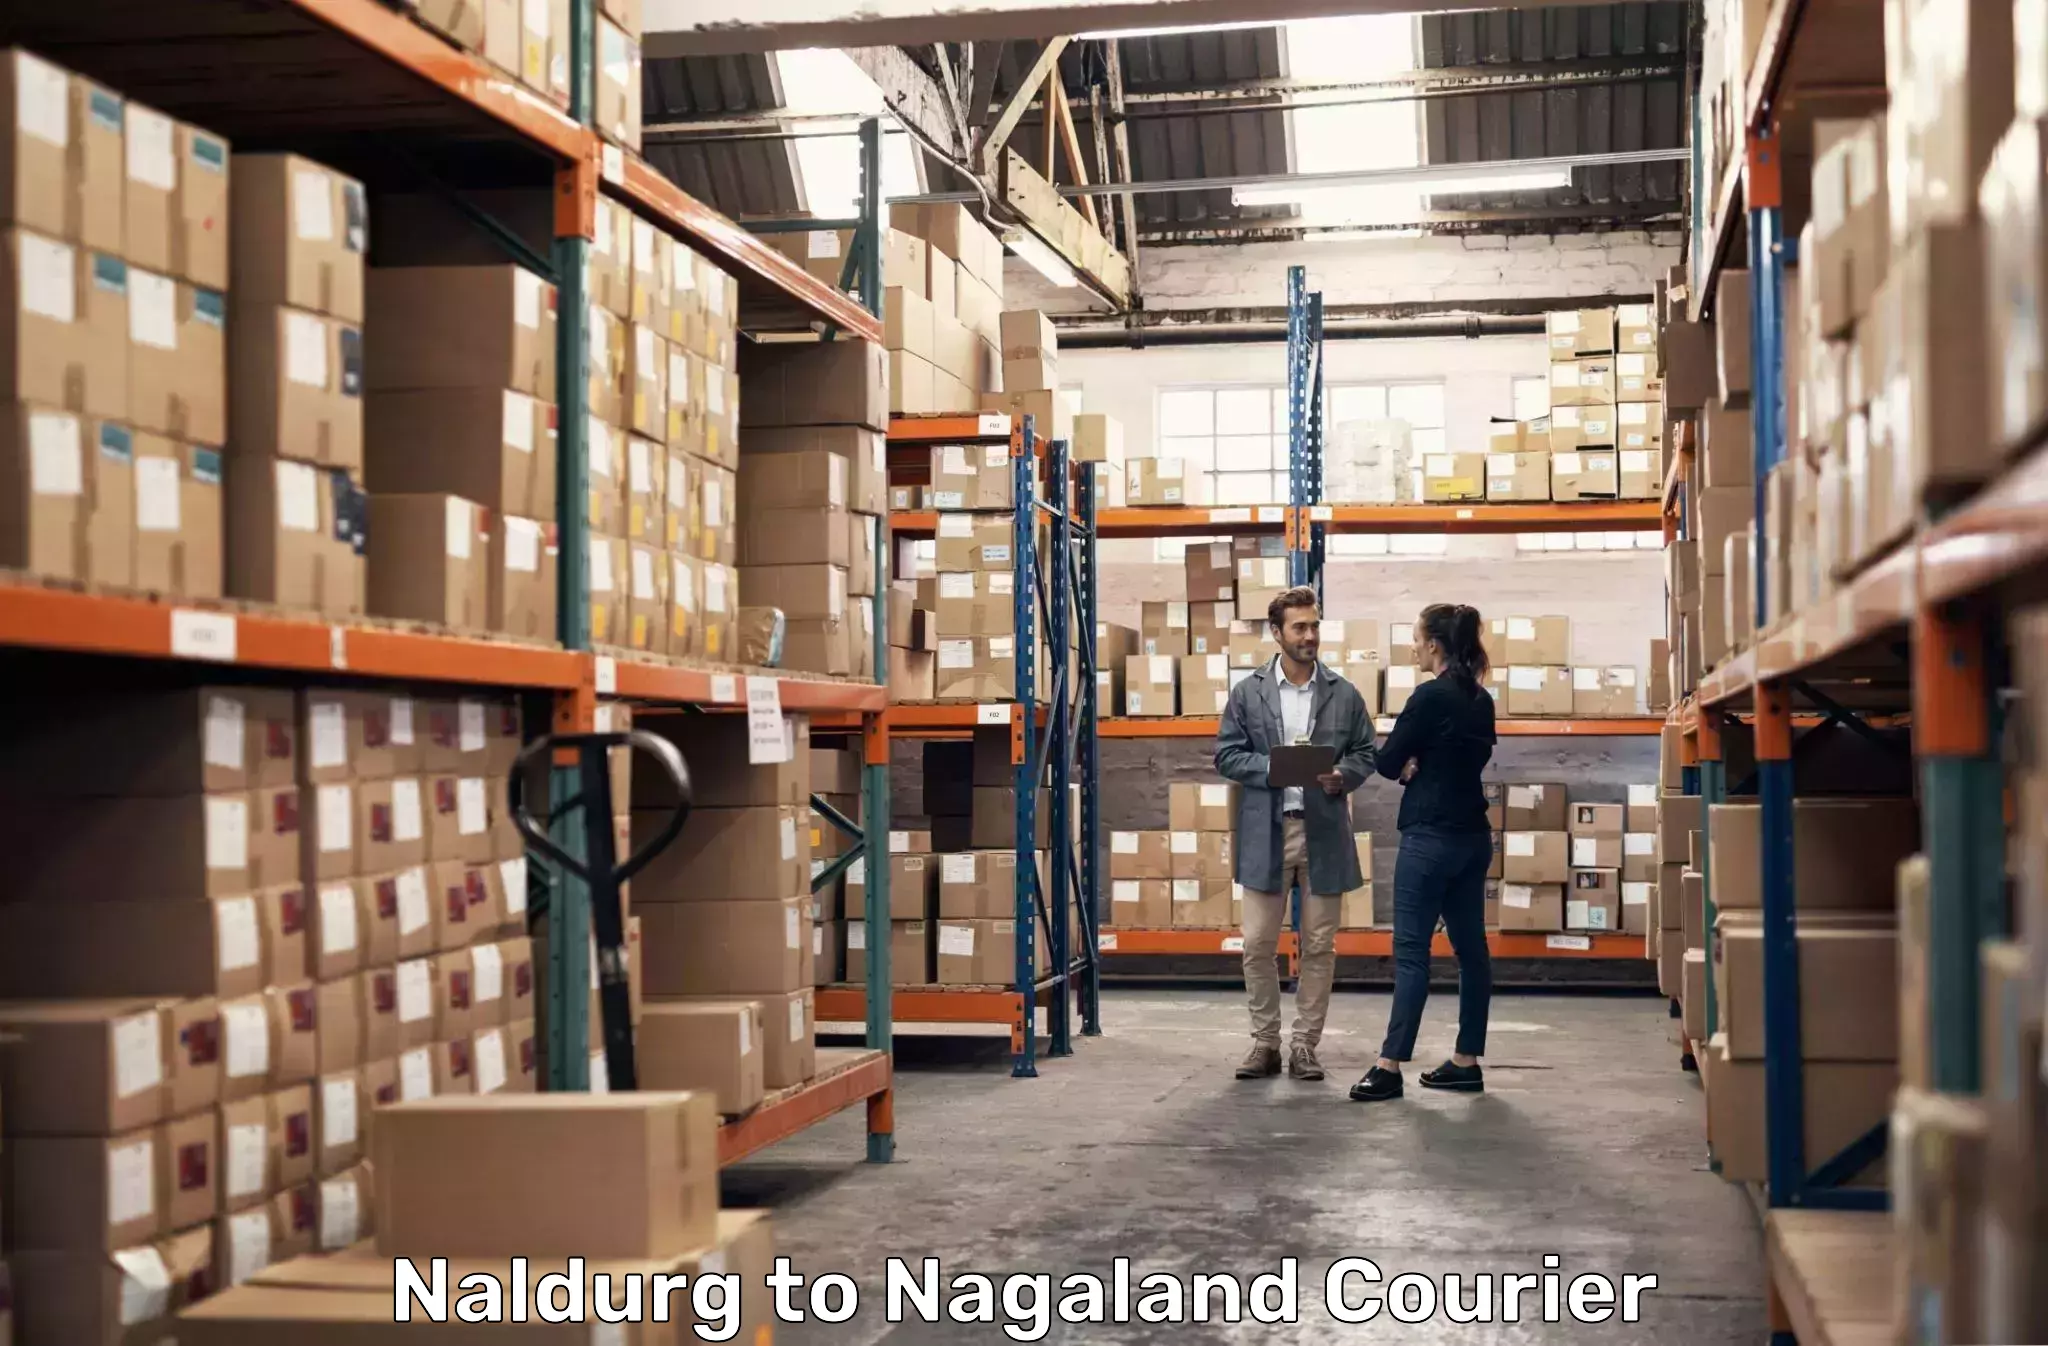 Global courier networks Naldurg to Kohima